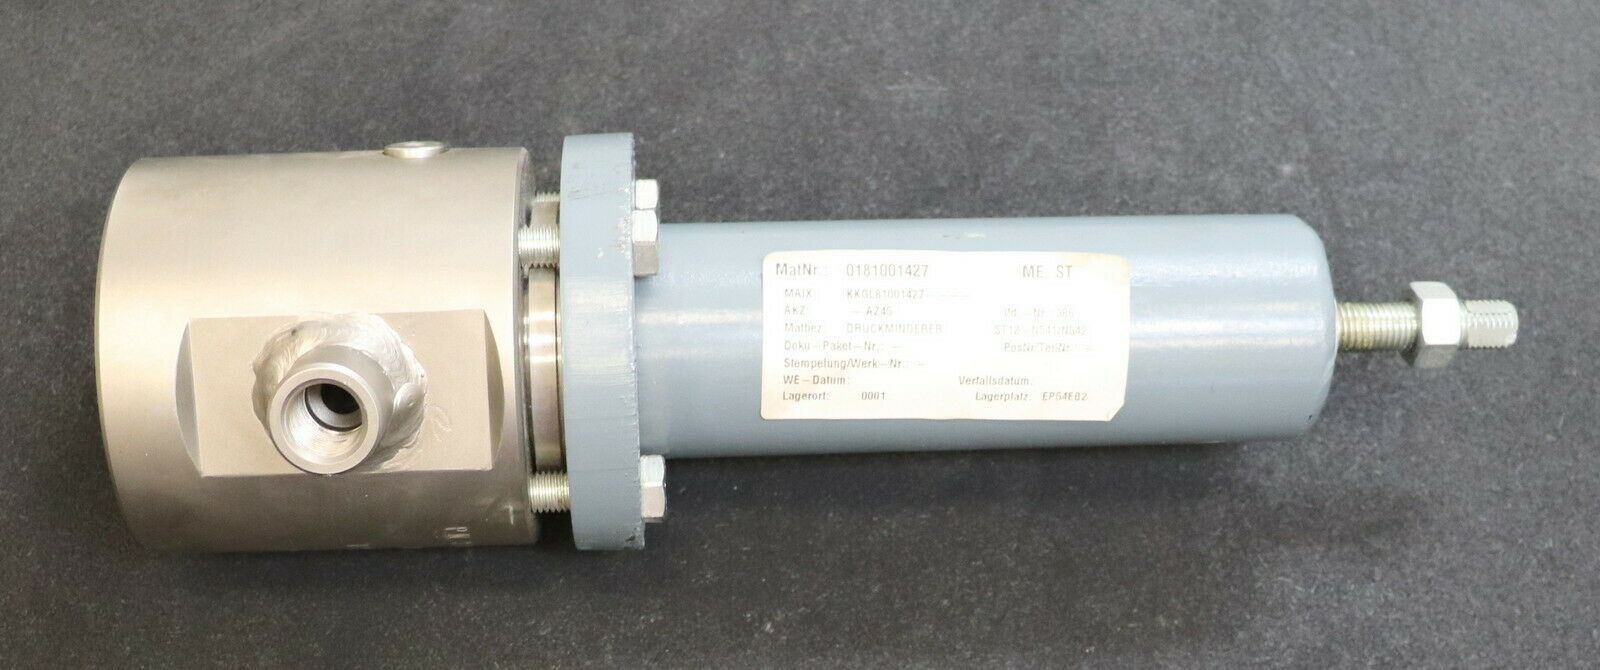 MANKENBERG Edelstahl-Druckminderventil pressure reducer Type DM 510 PN315/40